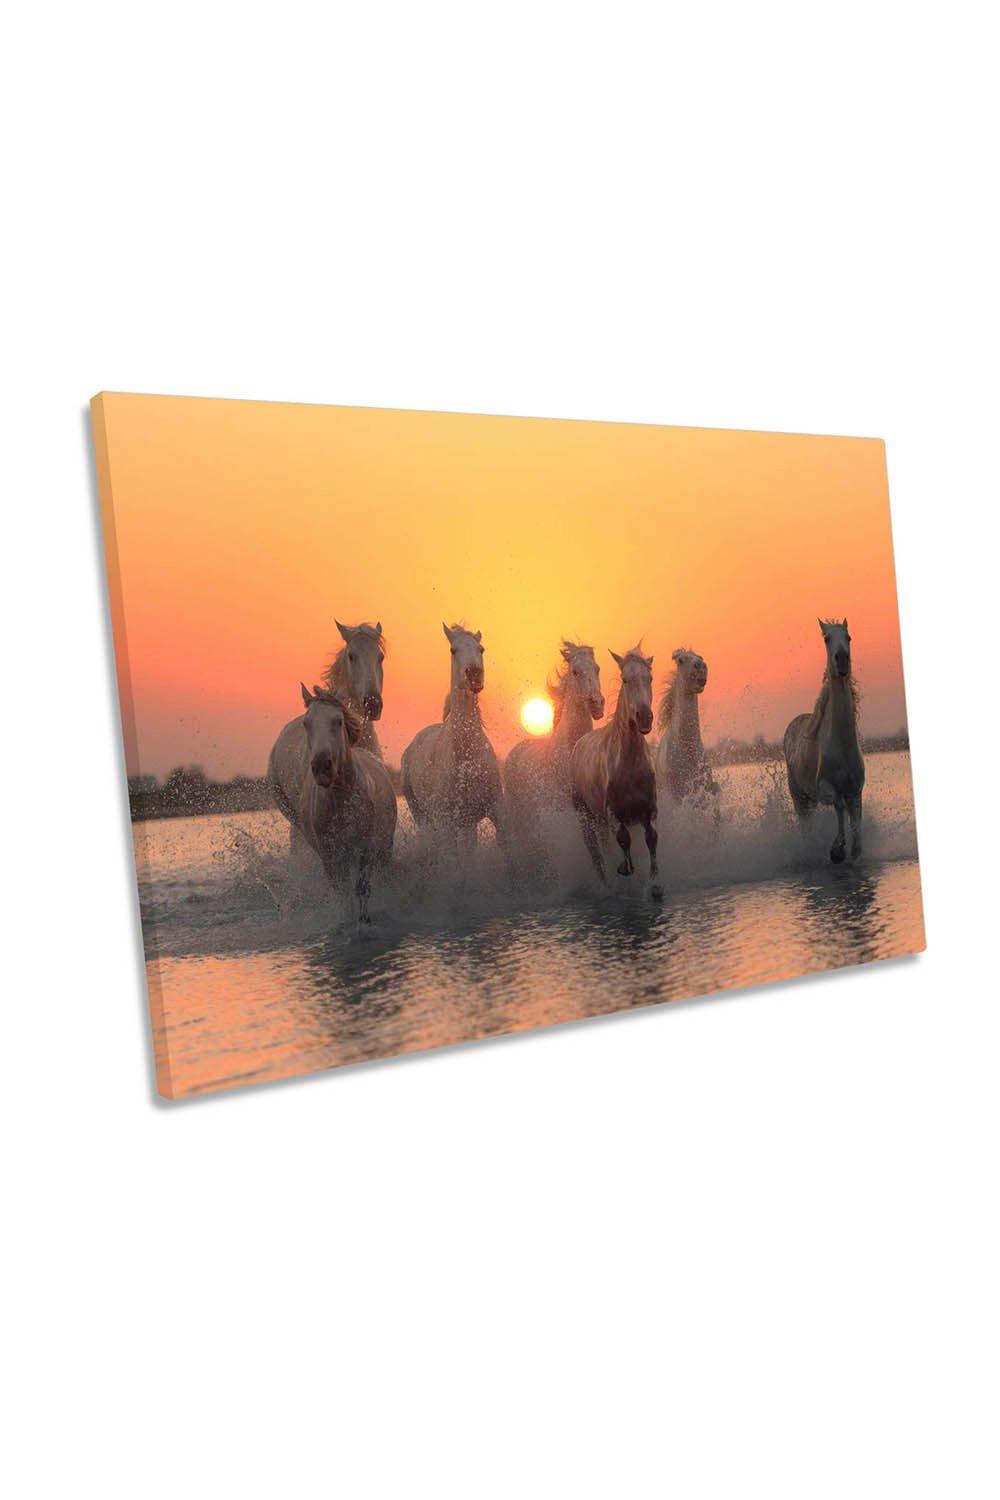 Sunset Beach Horses Orange Canvas Wall Art Picture Print